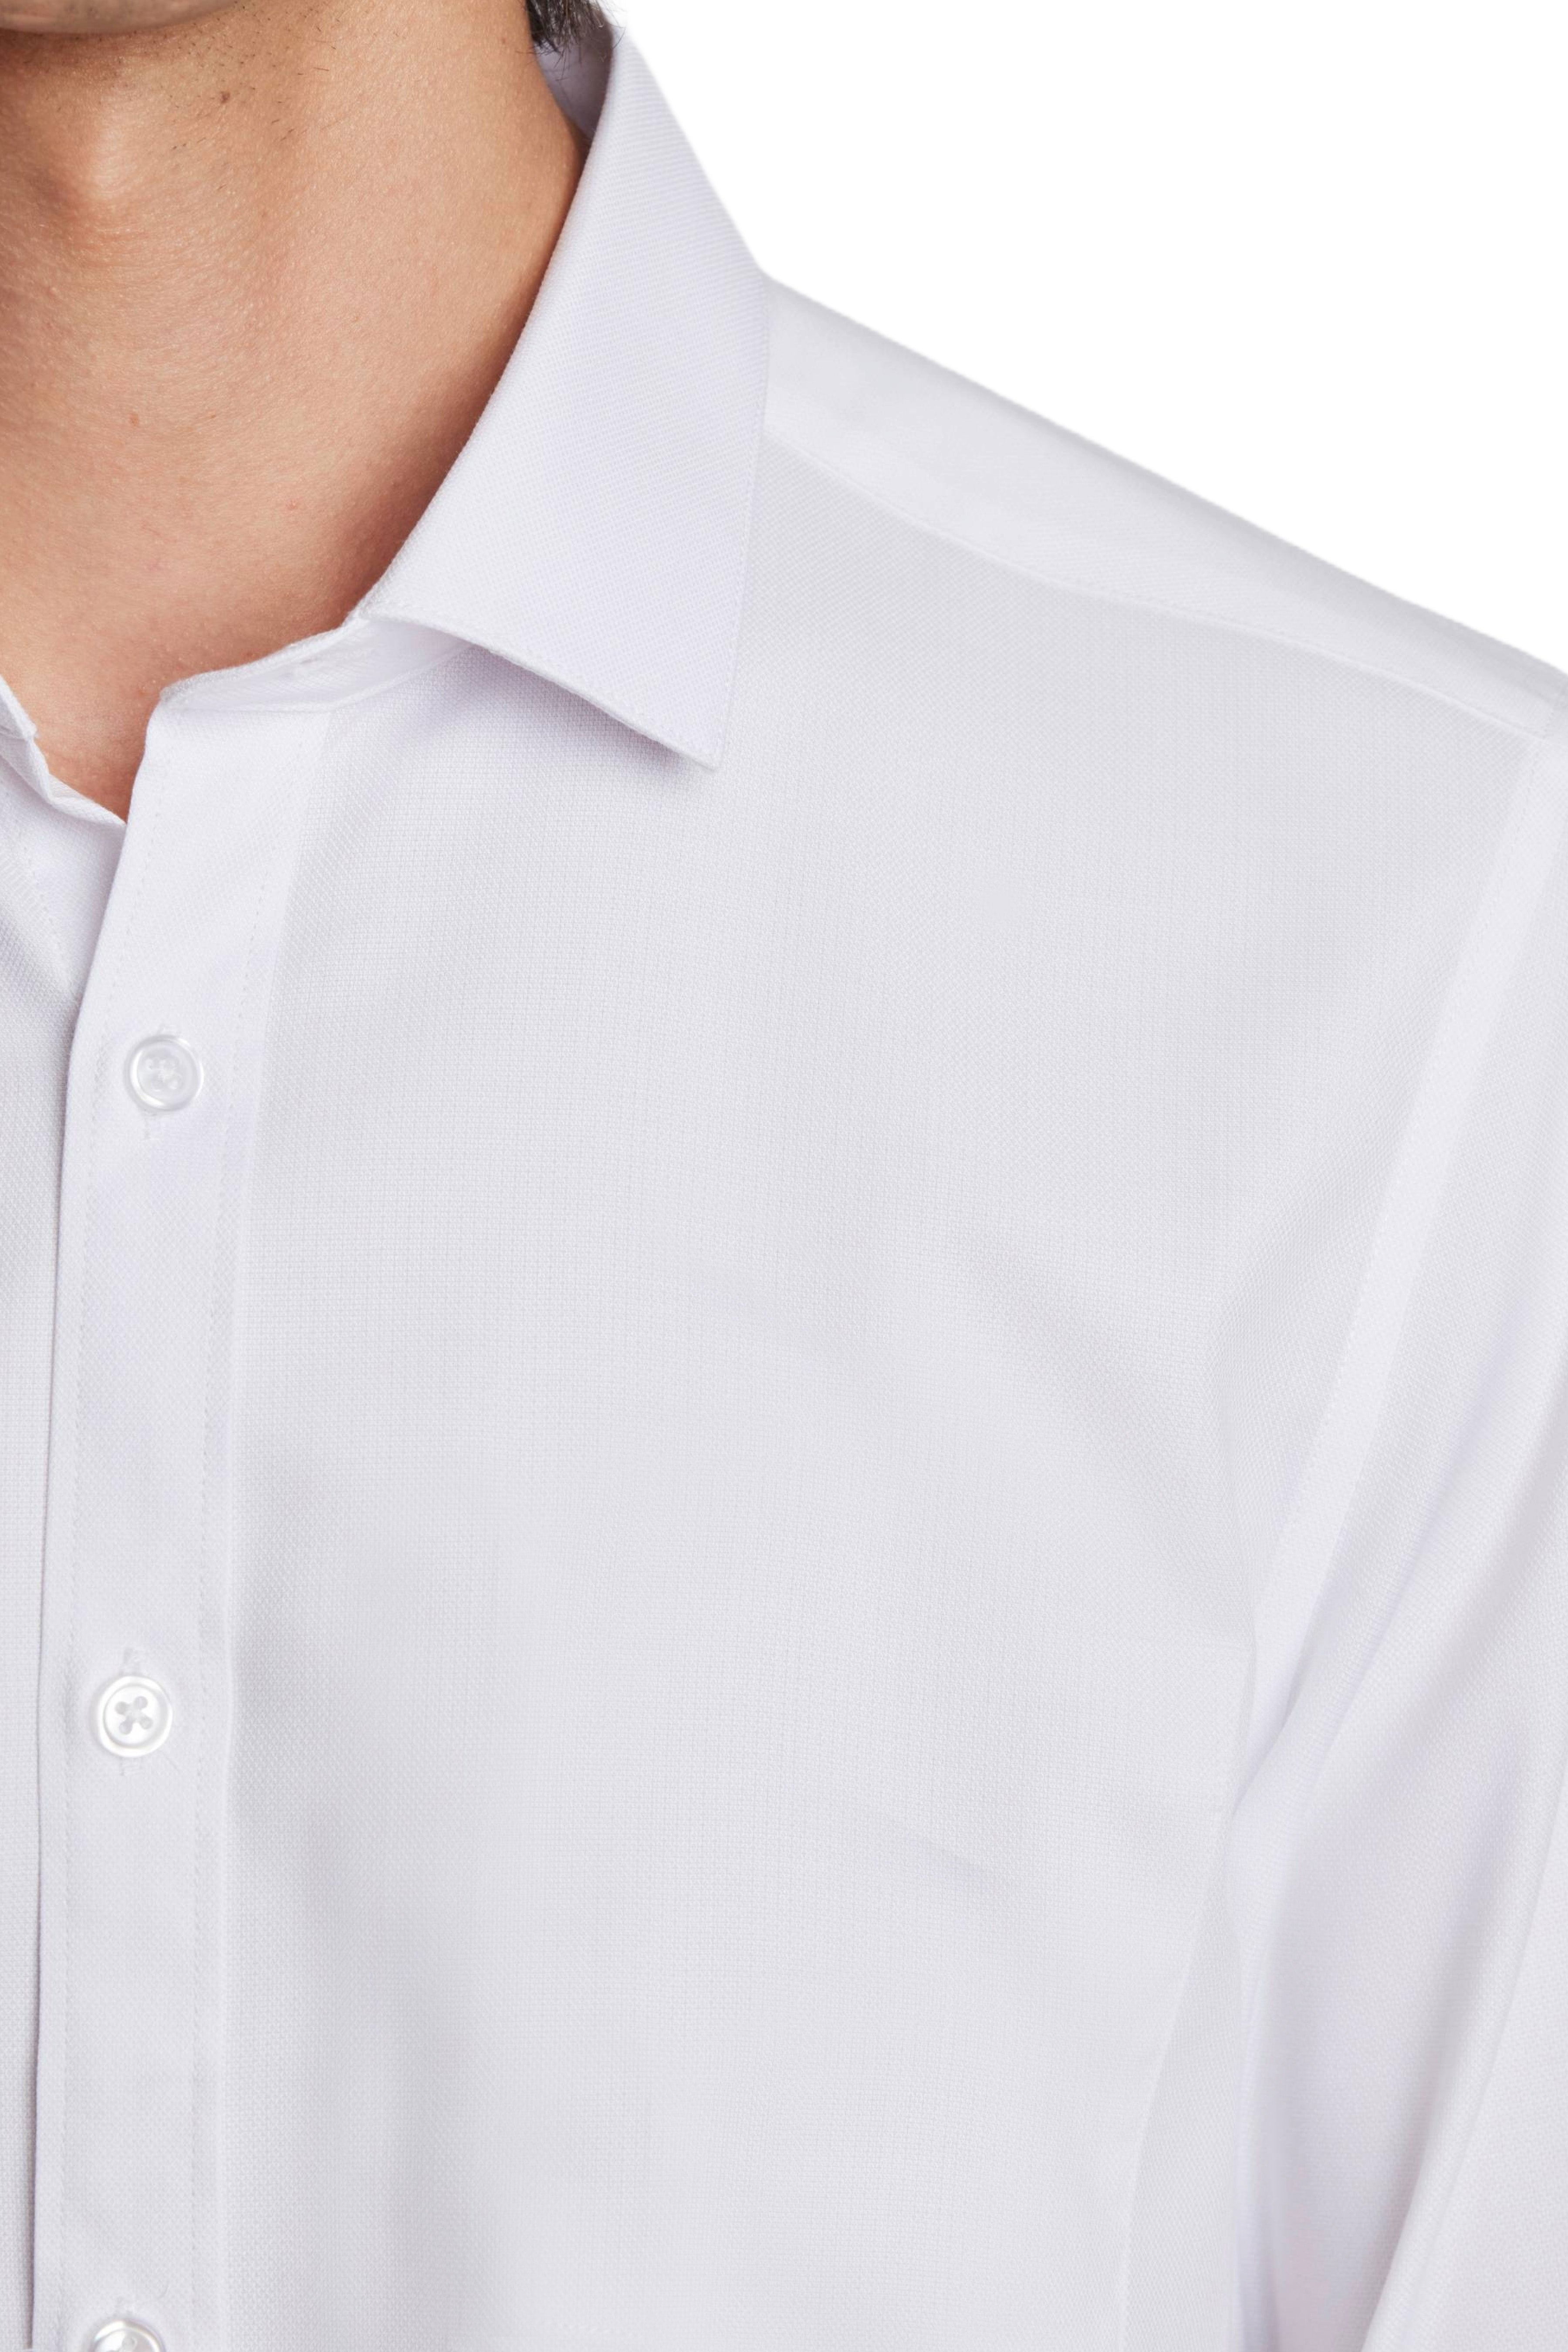 Samuel Spread Collar Shirt - All White